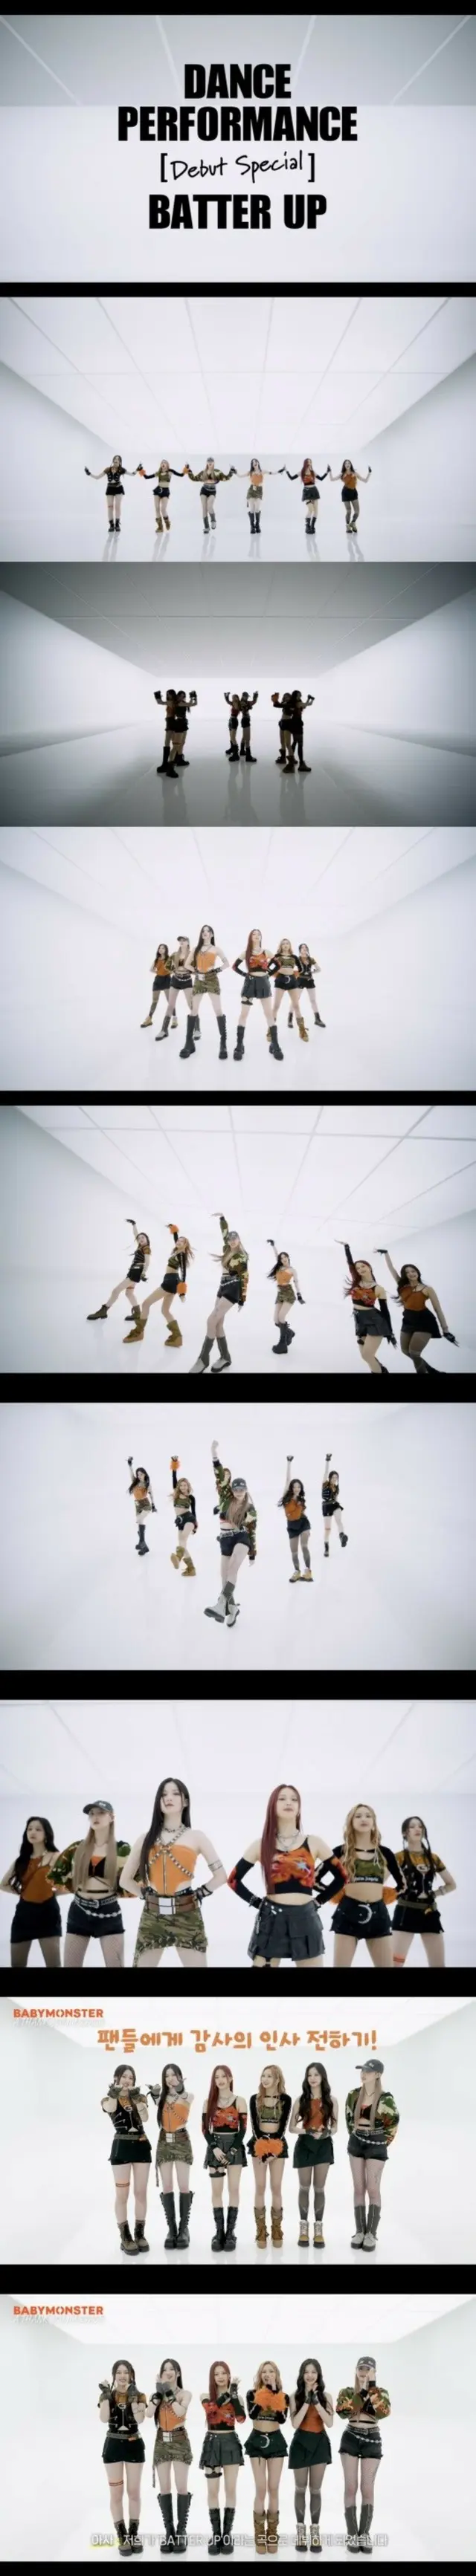 “YGの新人”「BABYMONSTER」、デビュー曲「BATTER UP」のダンスパフォーマンス映像公開